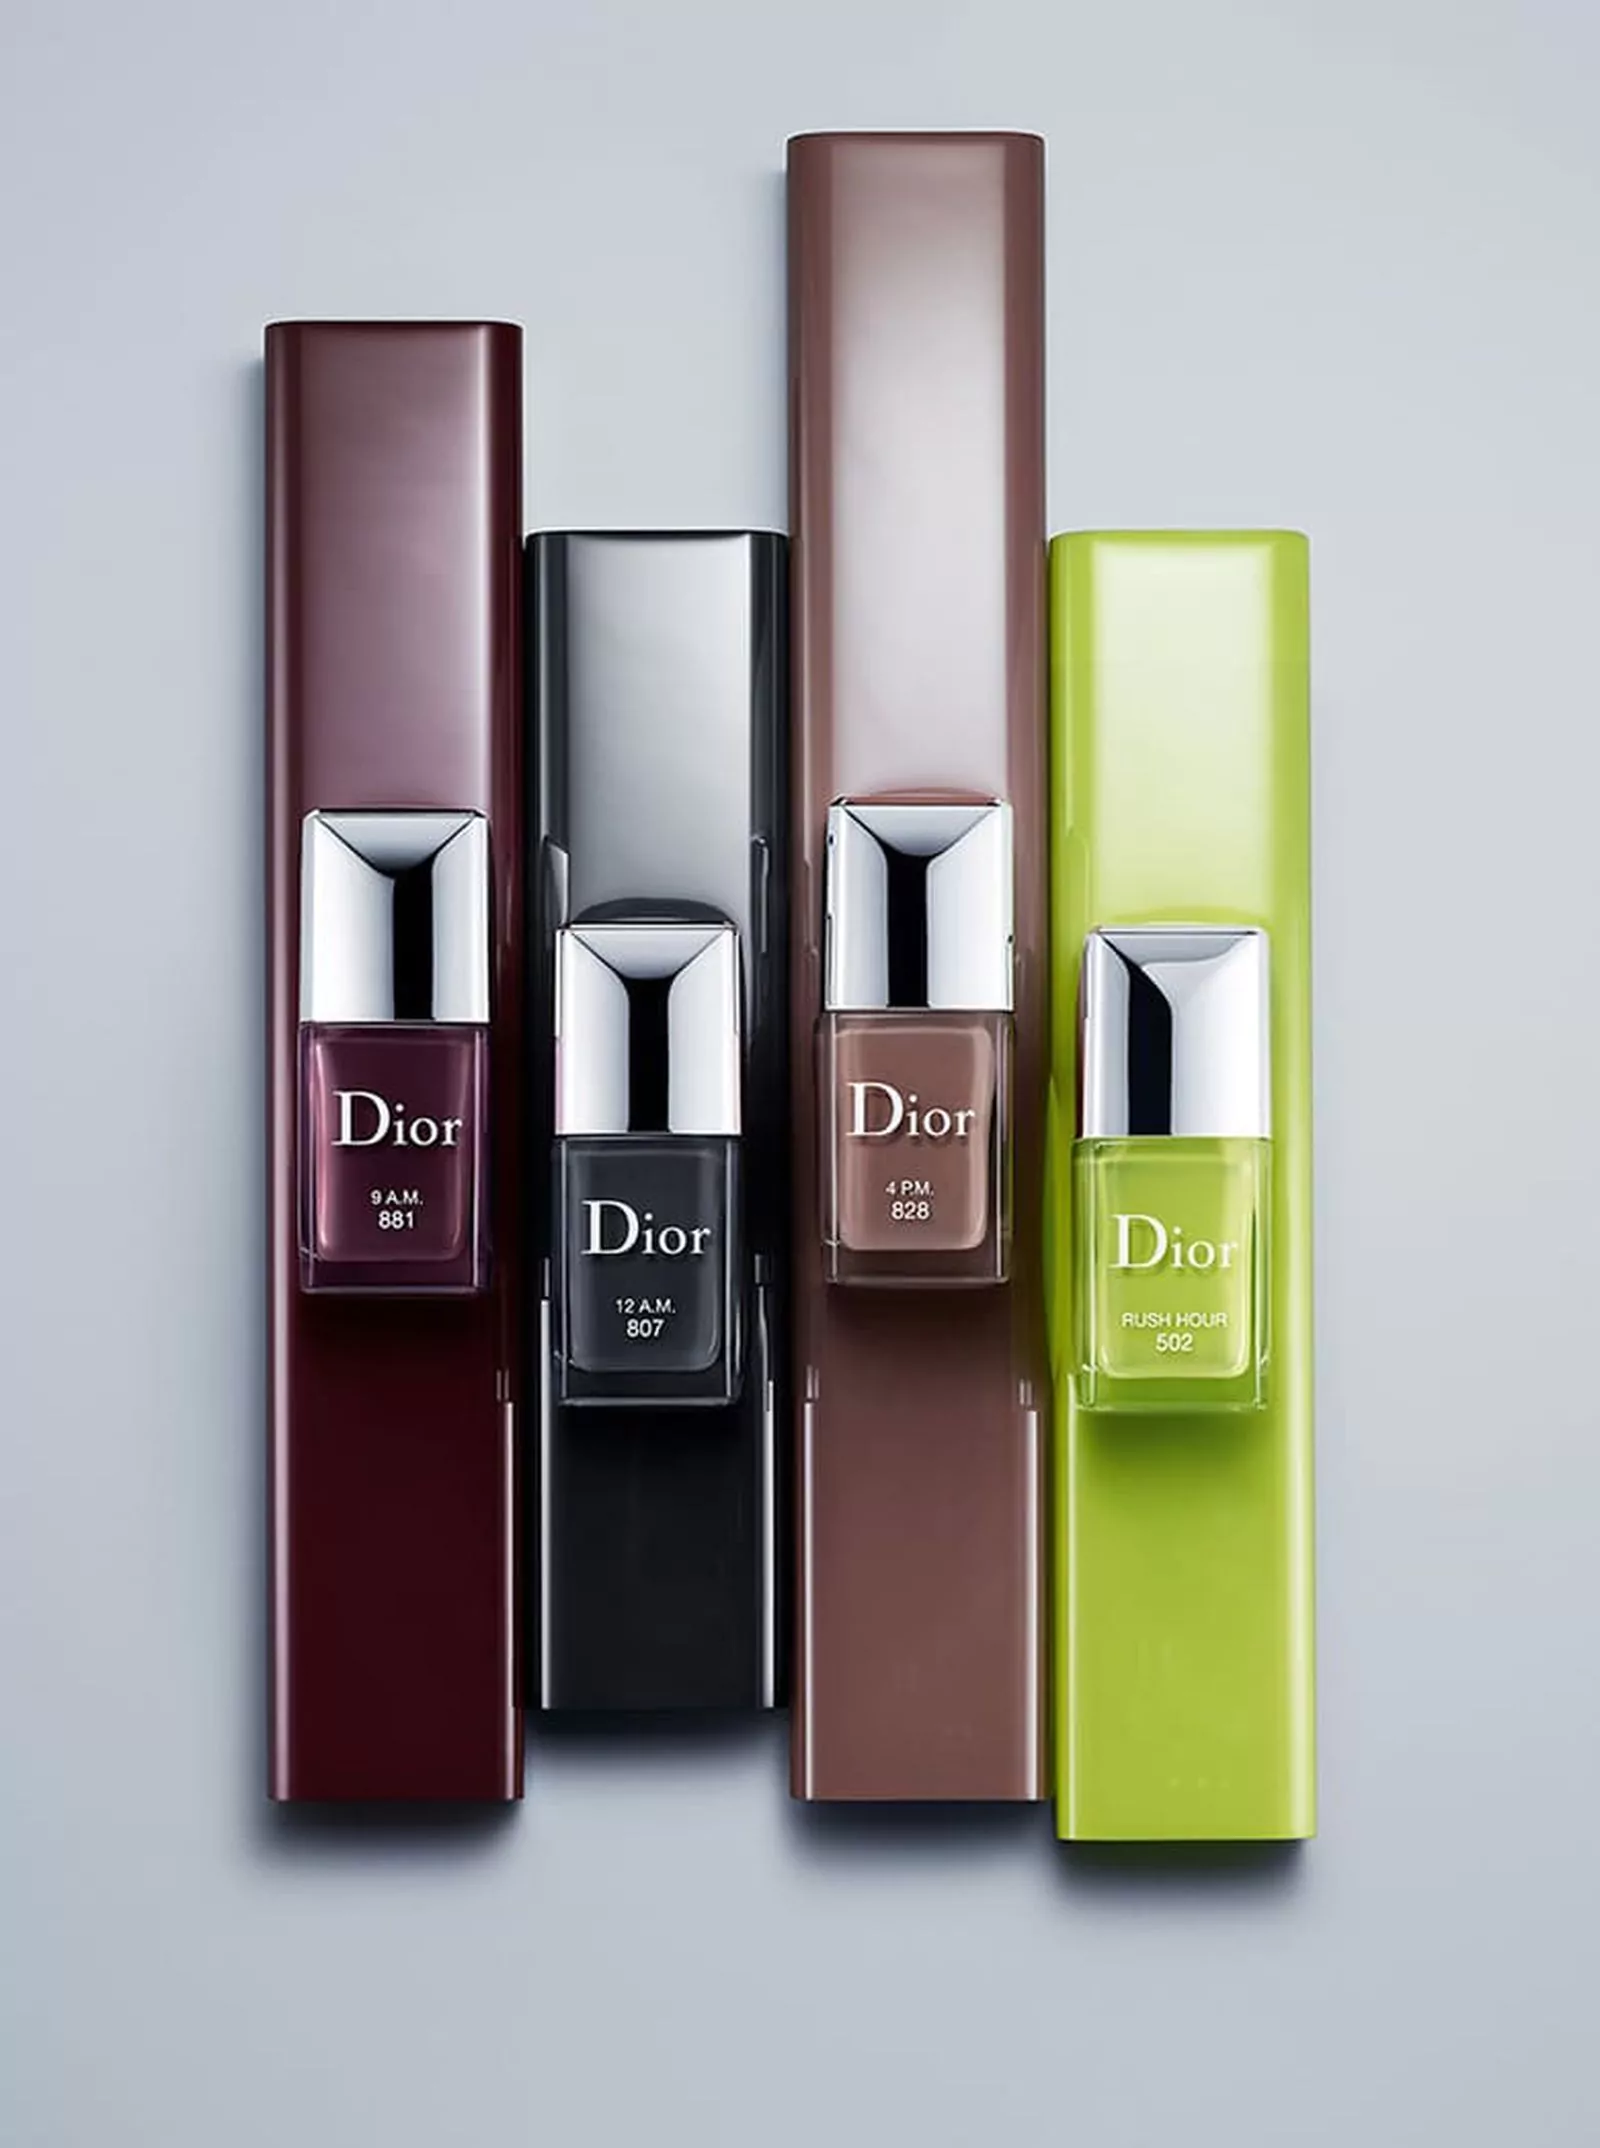 Dior, лак для ногтей Dior Vernis, оттенки: 9 A.M., 12 А.М., 4 P.M., Rush Hour